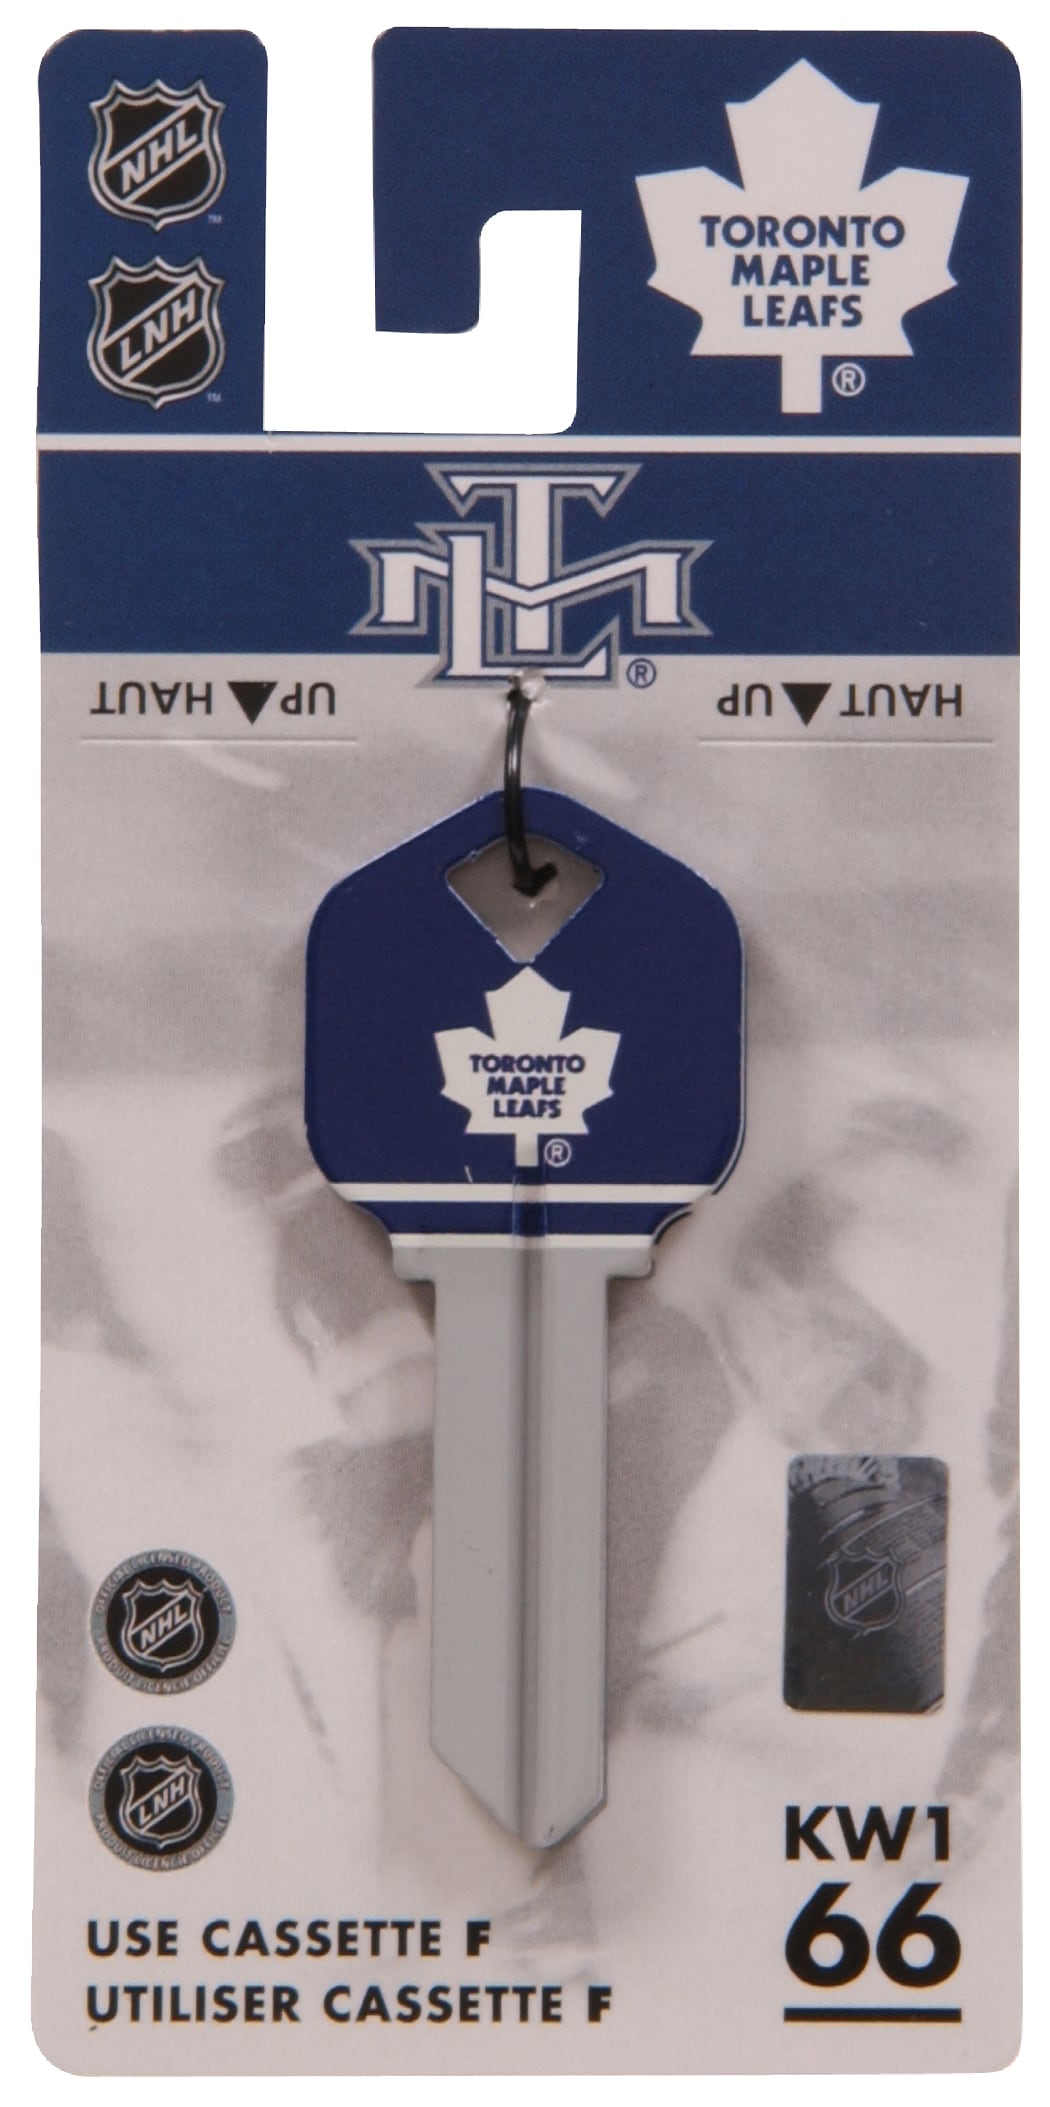 Toronto Maple Leafs Key Chain